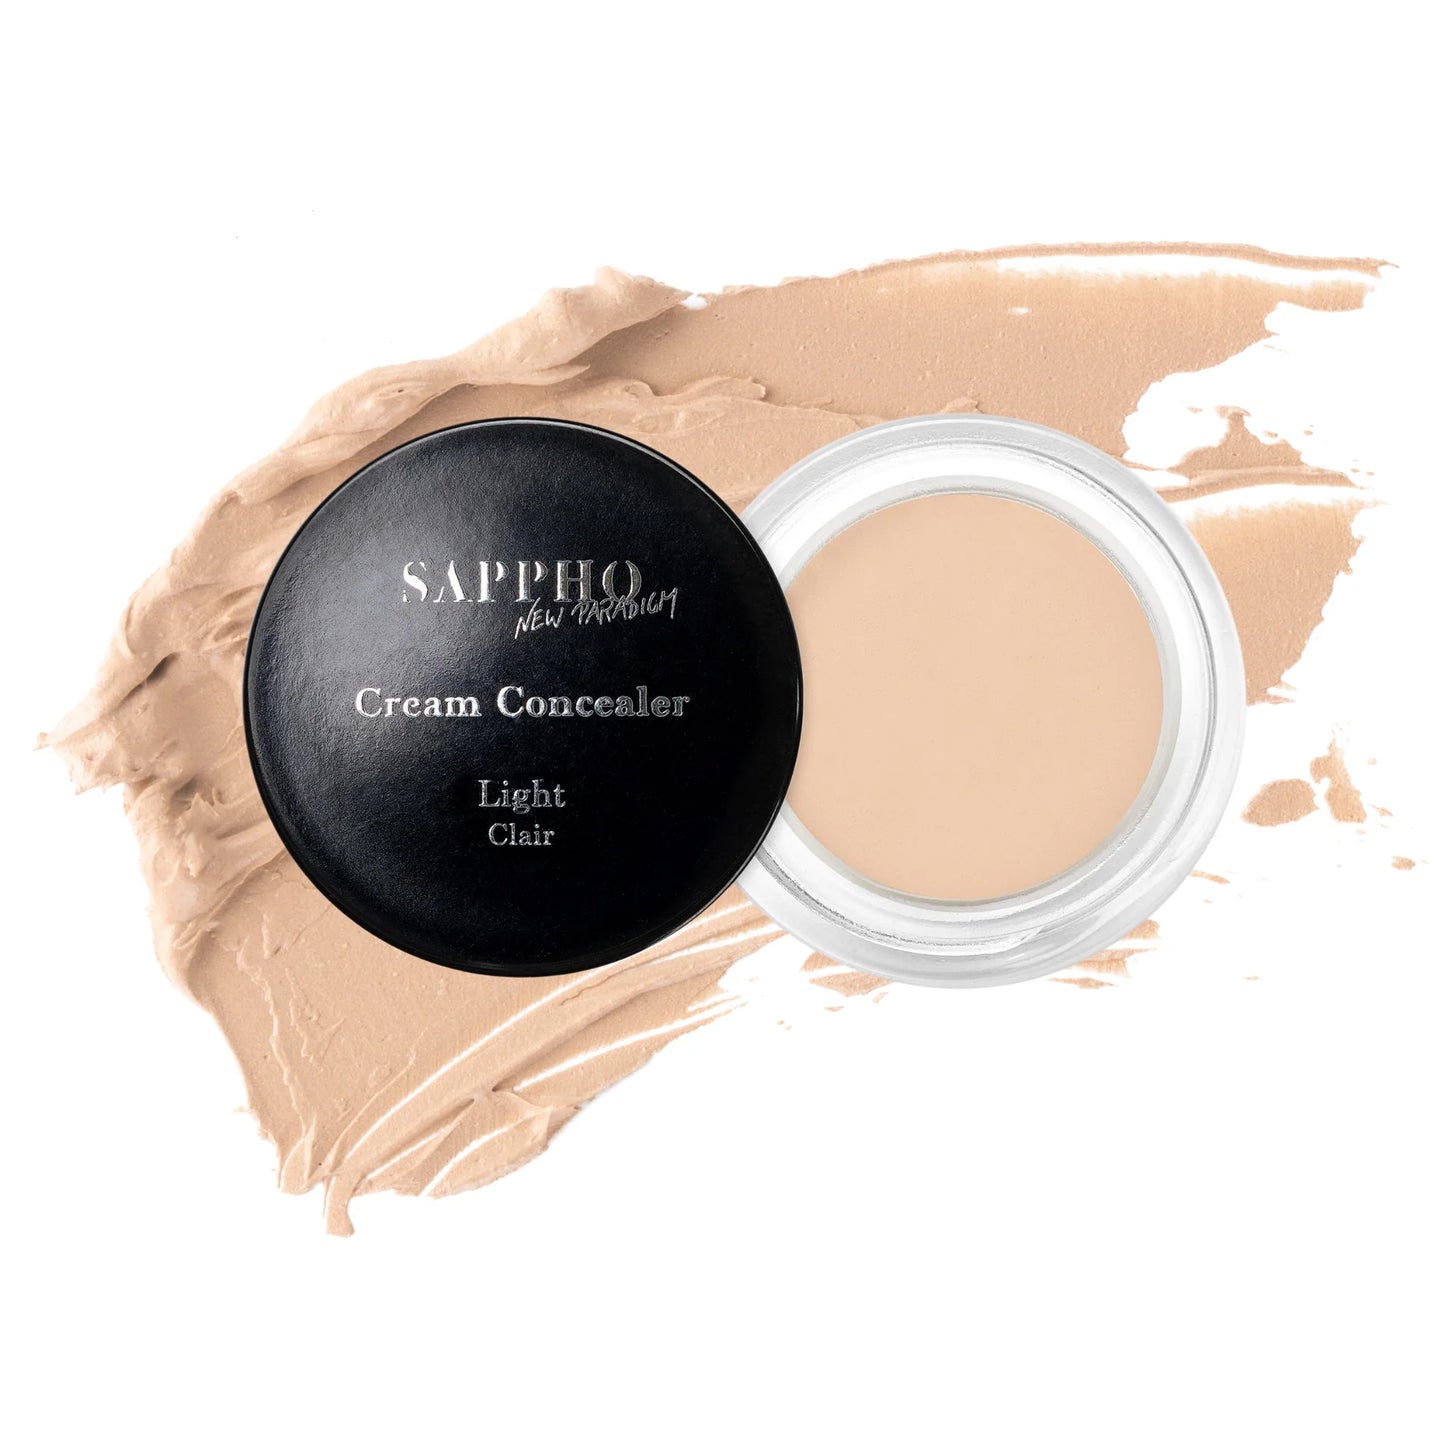 SAPPHO New Paradigm Cream Concealer Light